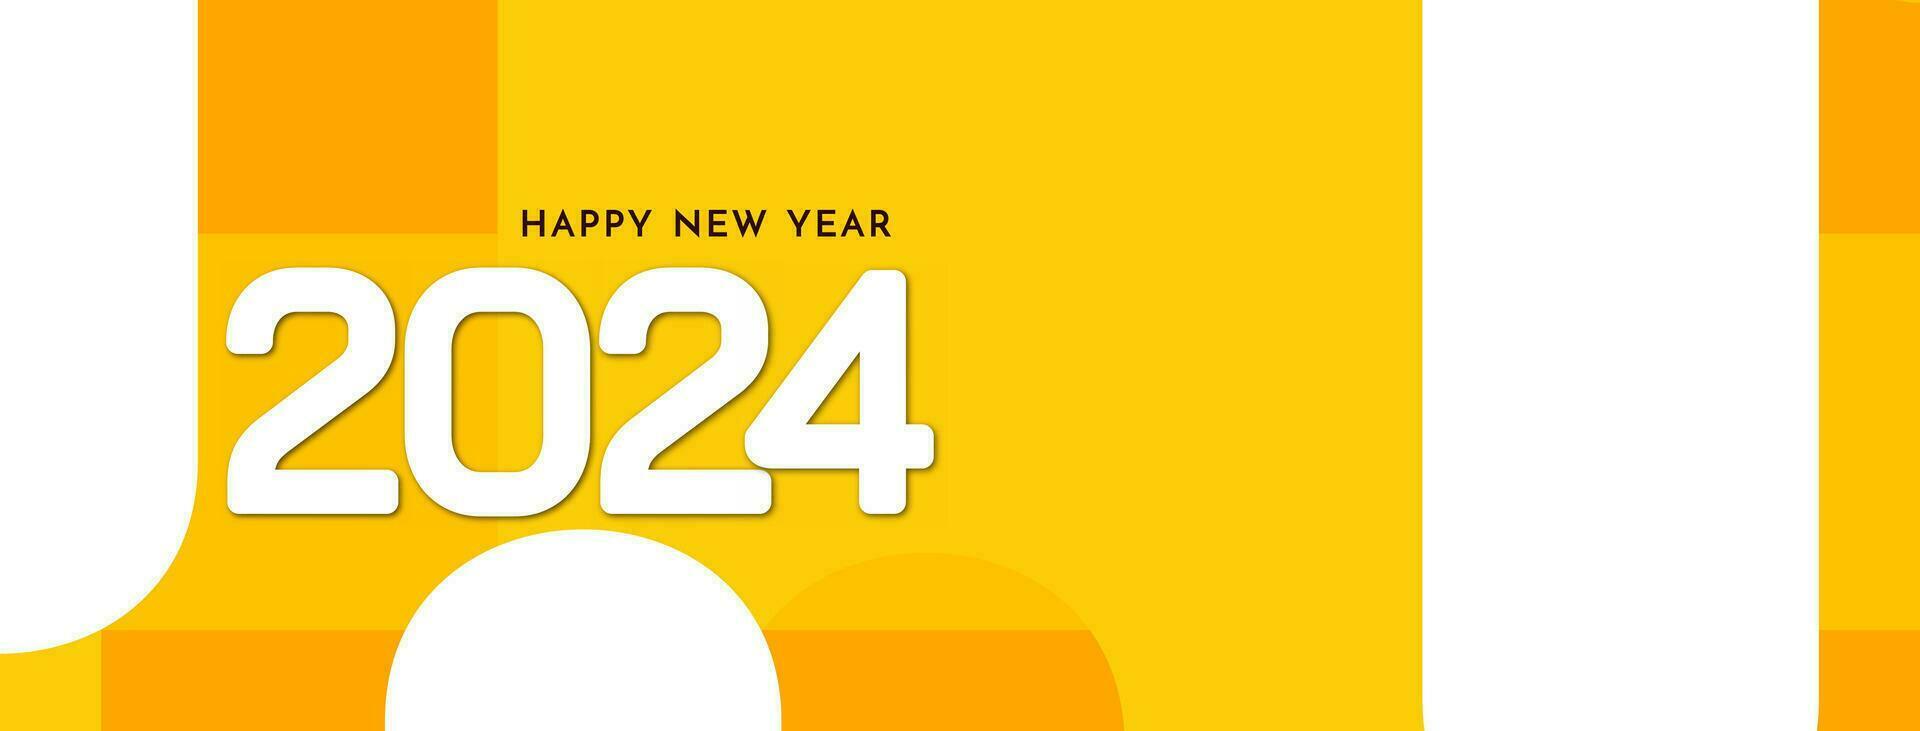 Modern Happy new year 2024 celebration banner design vector